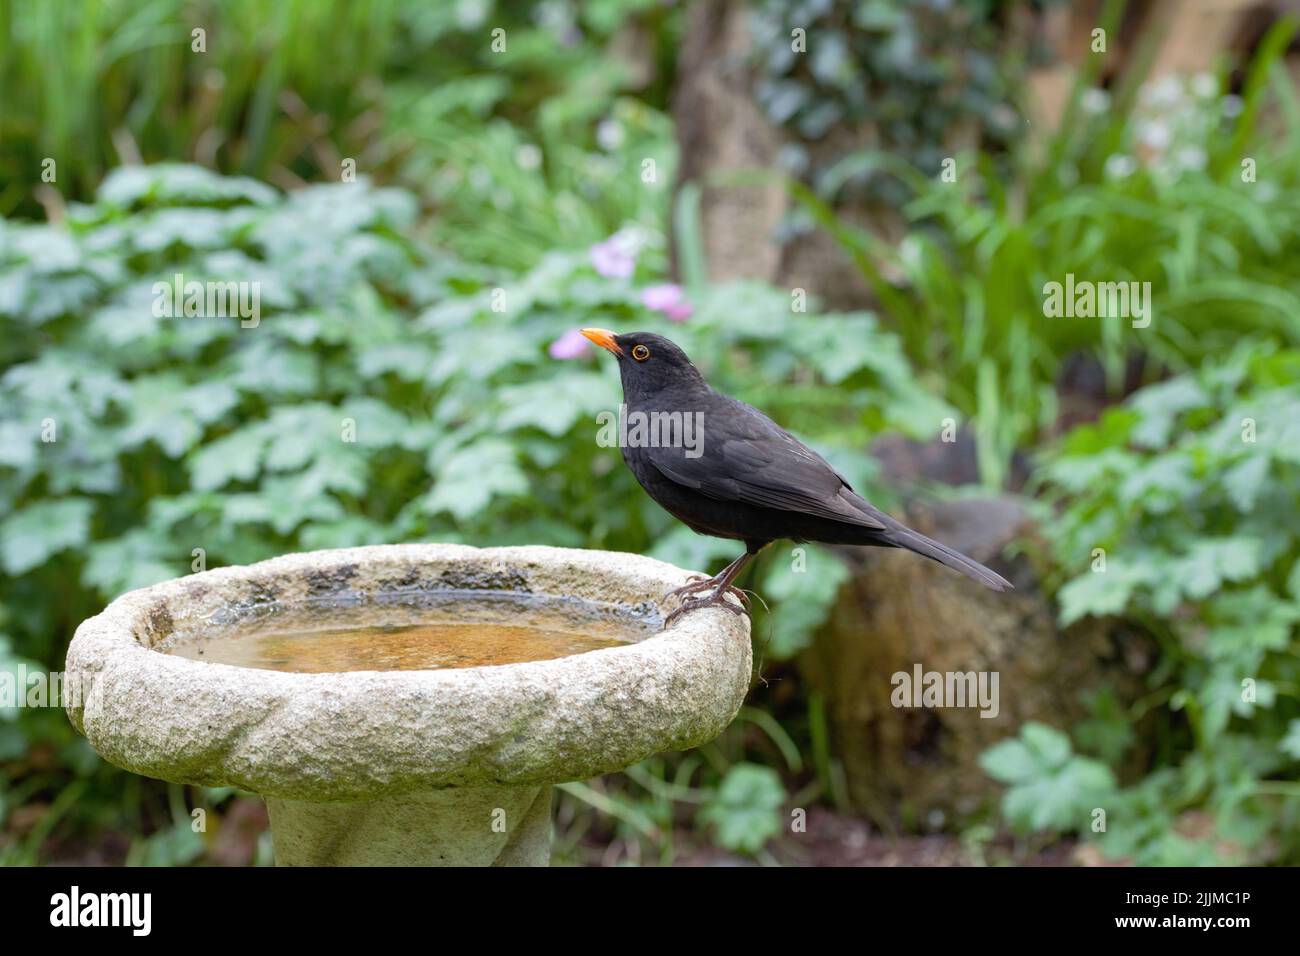 Male blackbird (Turdus Merula) perched on a birdbath in a garden proudly  showing his black plumage and bright yellow beak. Stock Photo